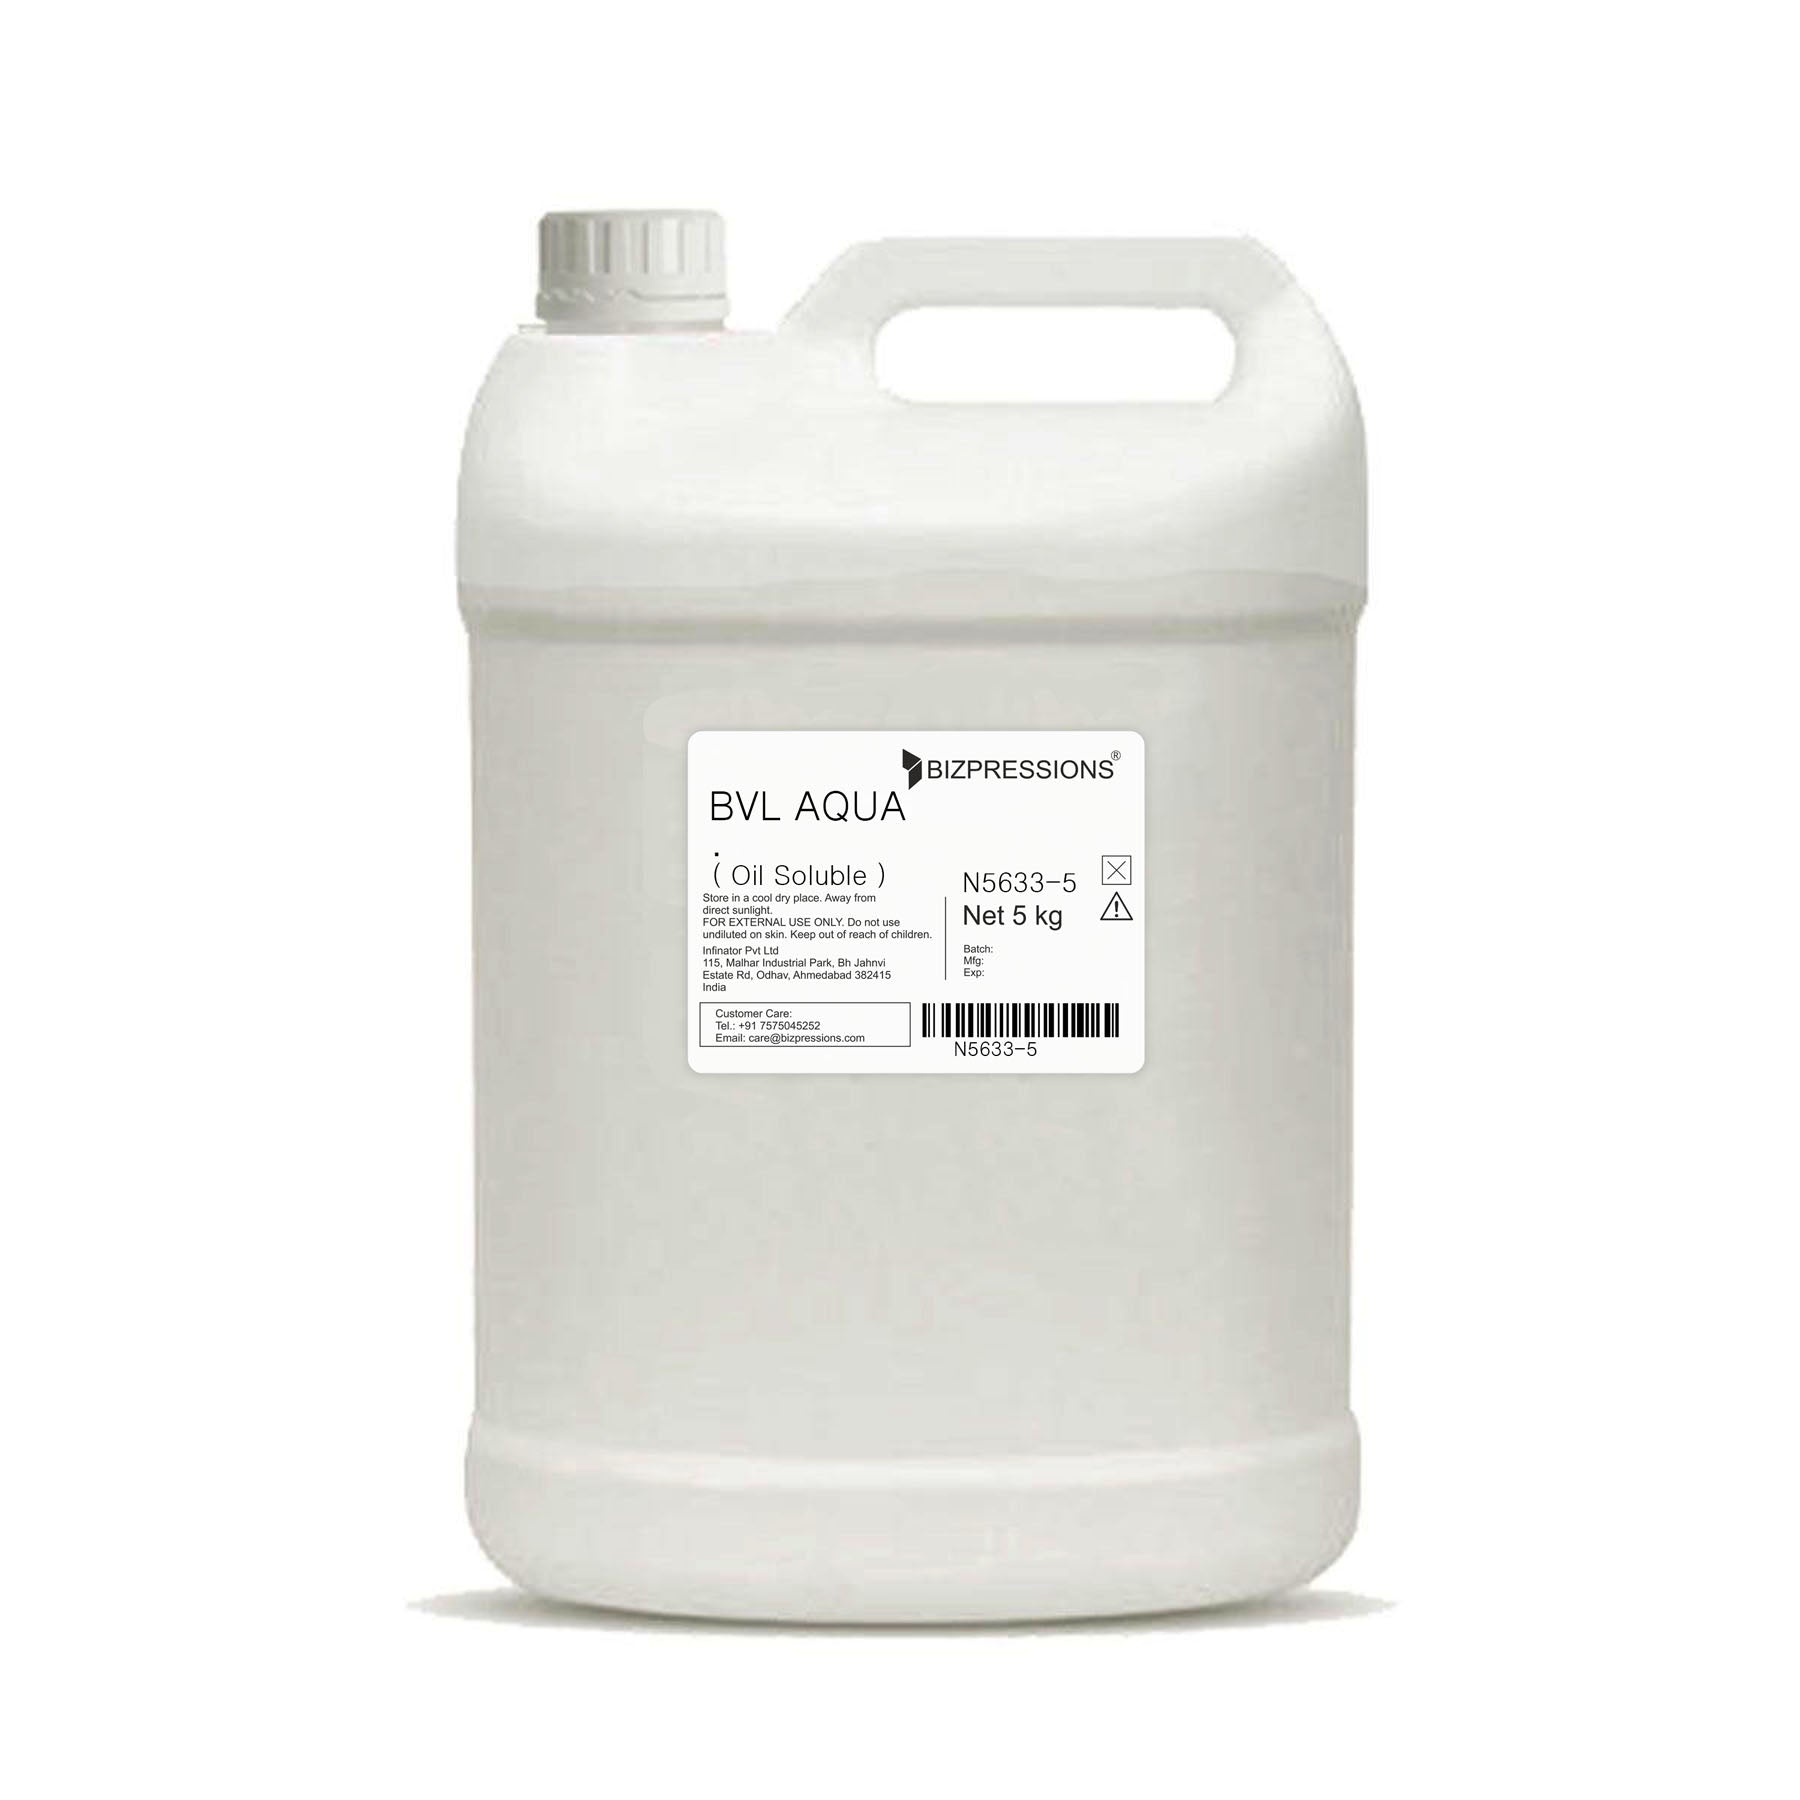 BVL AQUA - Fragrance ( Oil Soluble ) - 5 kg